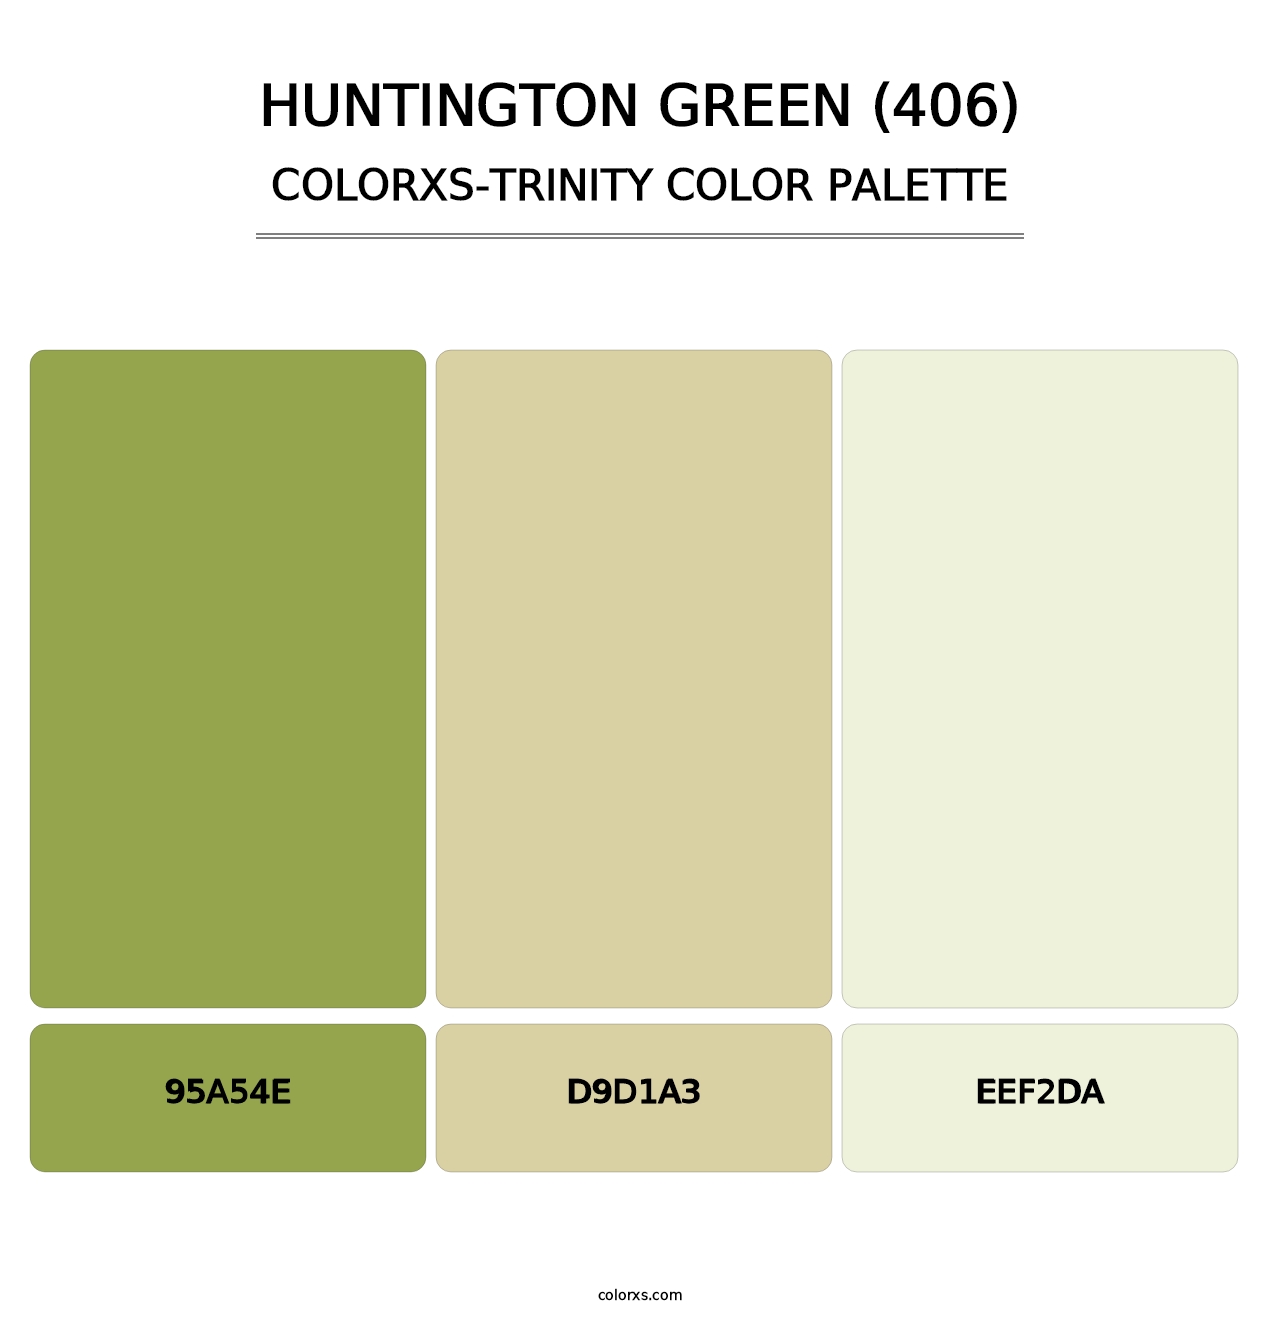 Huntington Green (406) - Colorxs Trinity Palette